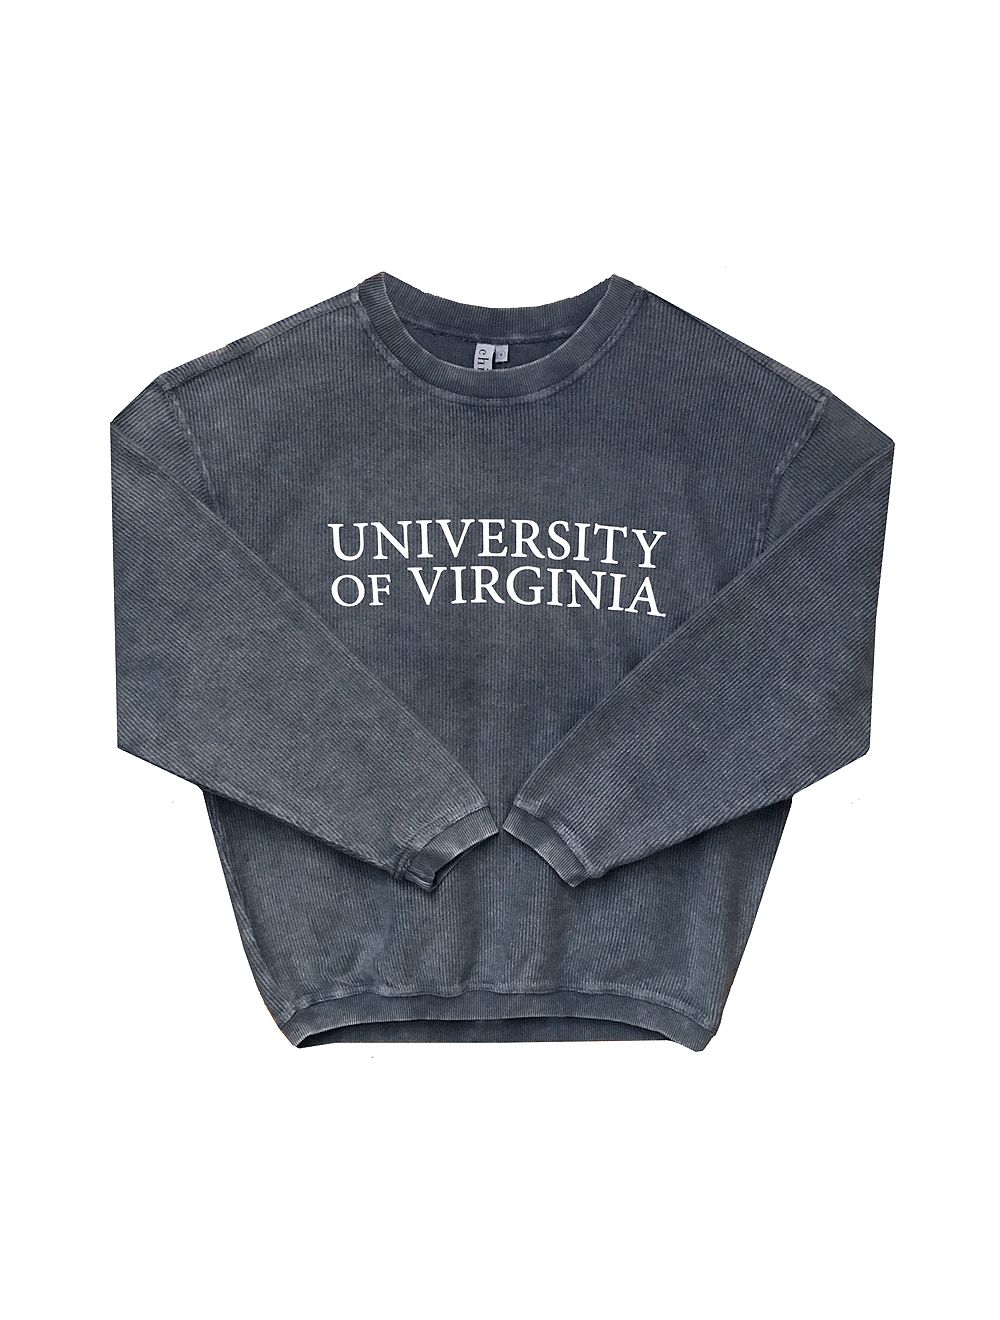 Corded University of Virginia Sweatshirt - Mincer's of Charlottesville